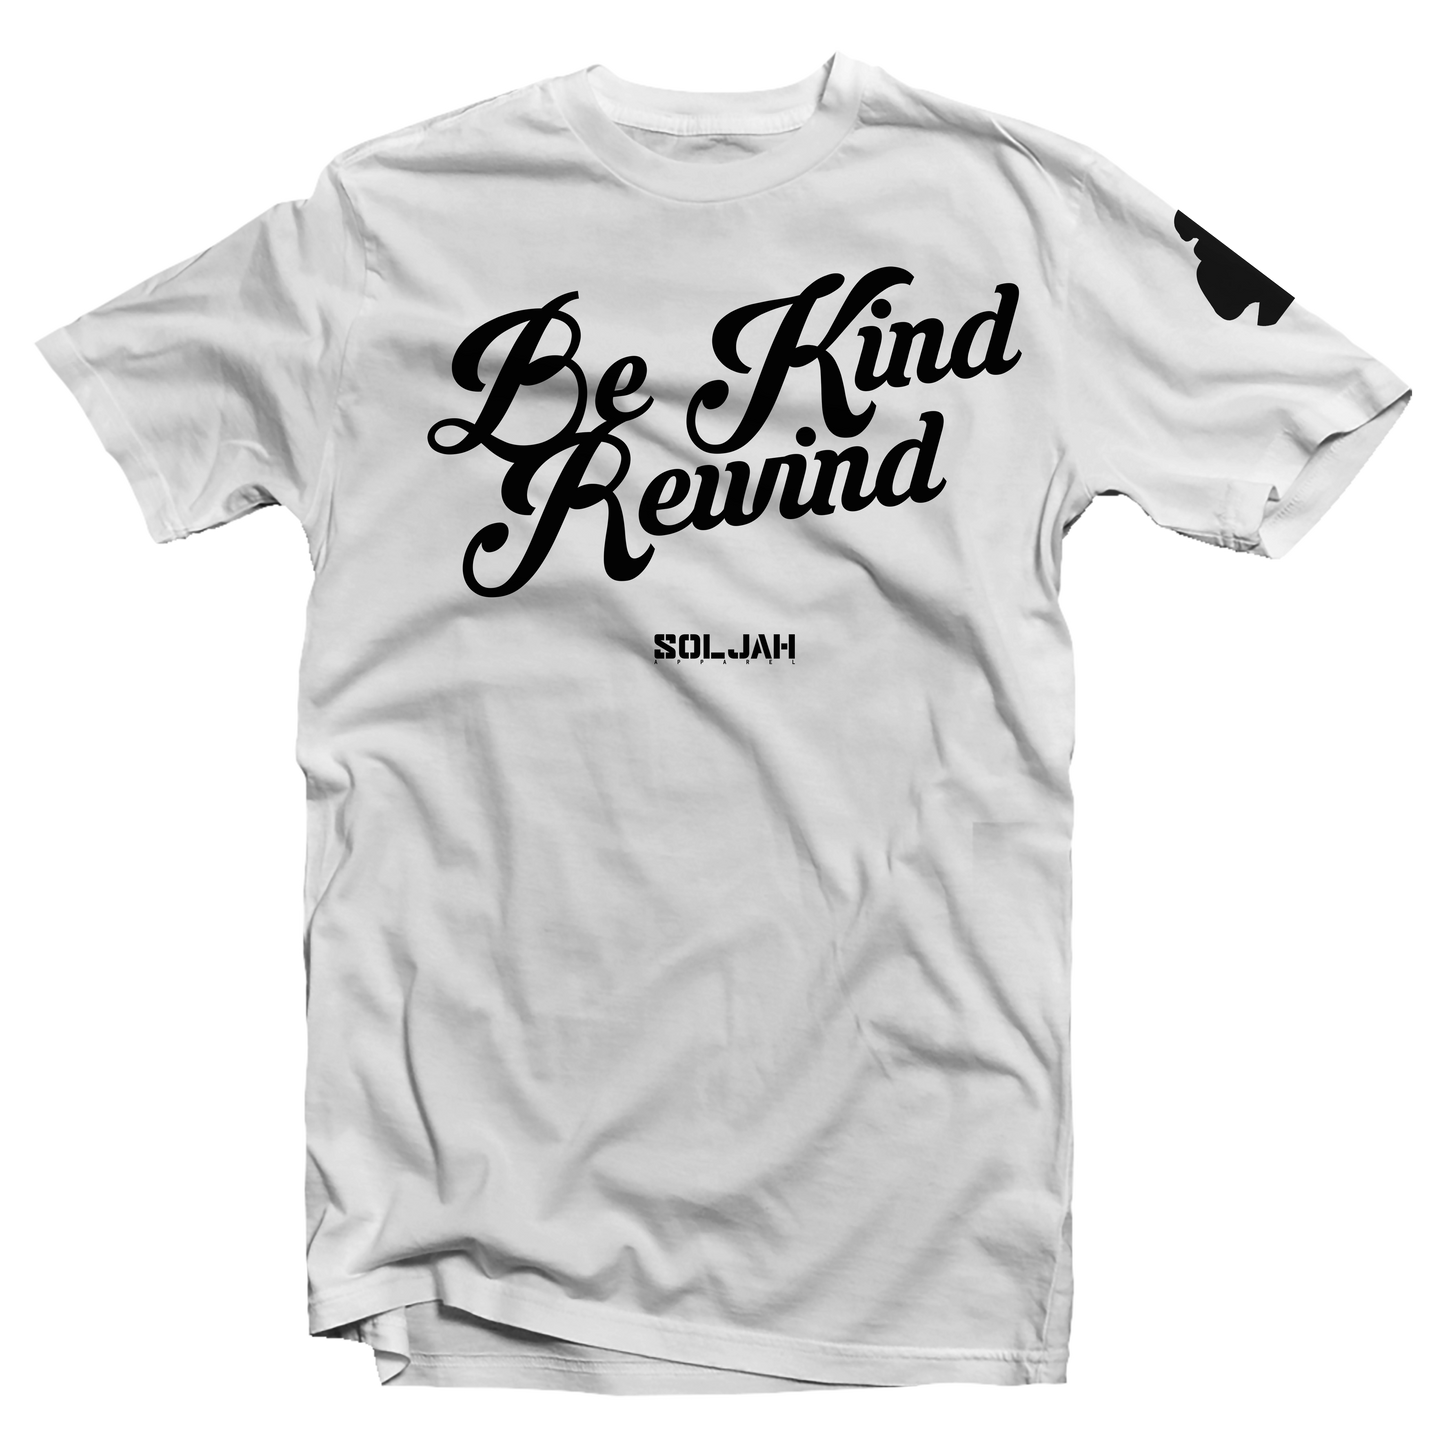 Be Kind Rewind - White Tee